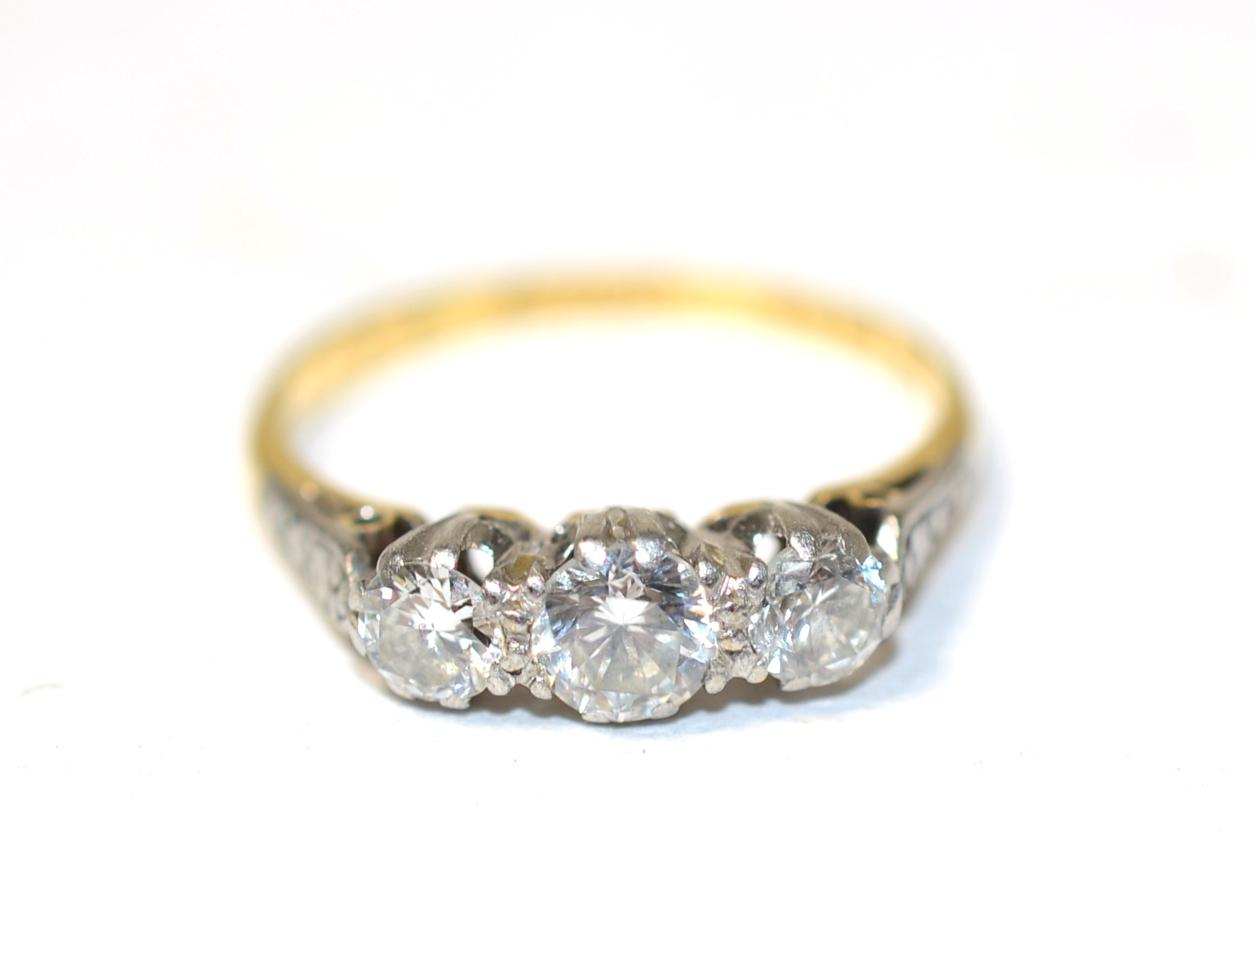 Lot 359 - An 18 carat gold three stone diamond ring, graduated round brilliant cut diamonds in claw settings